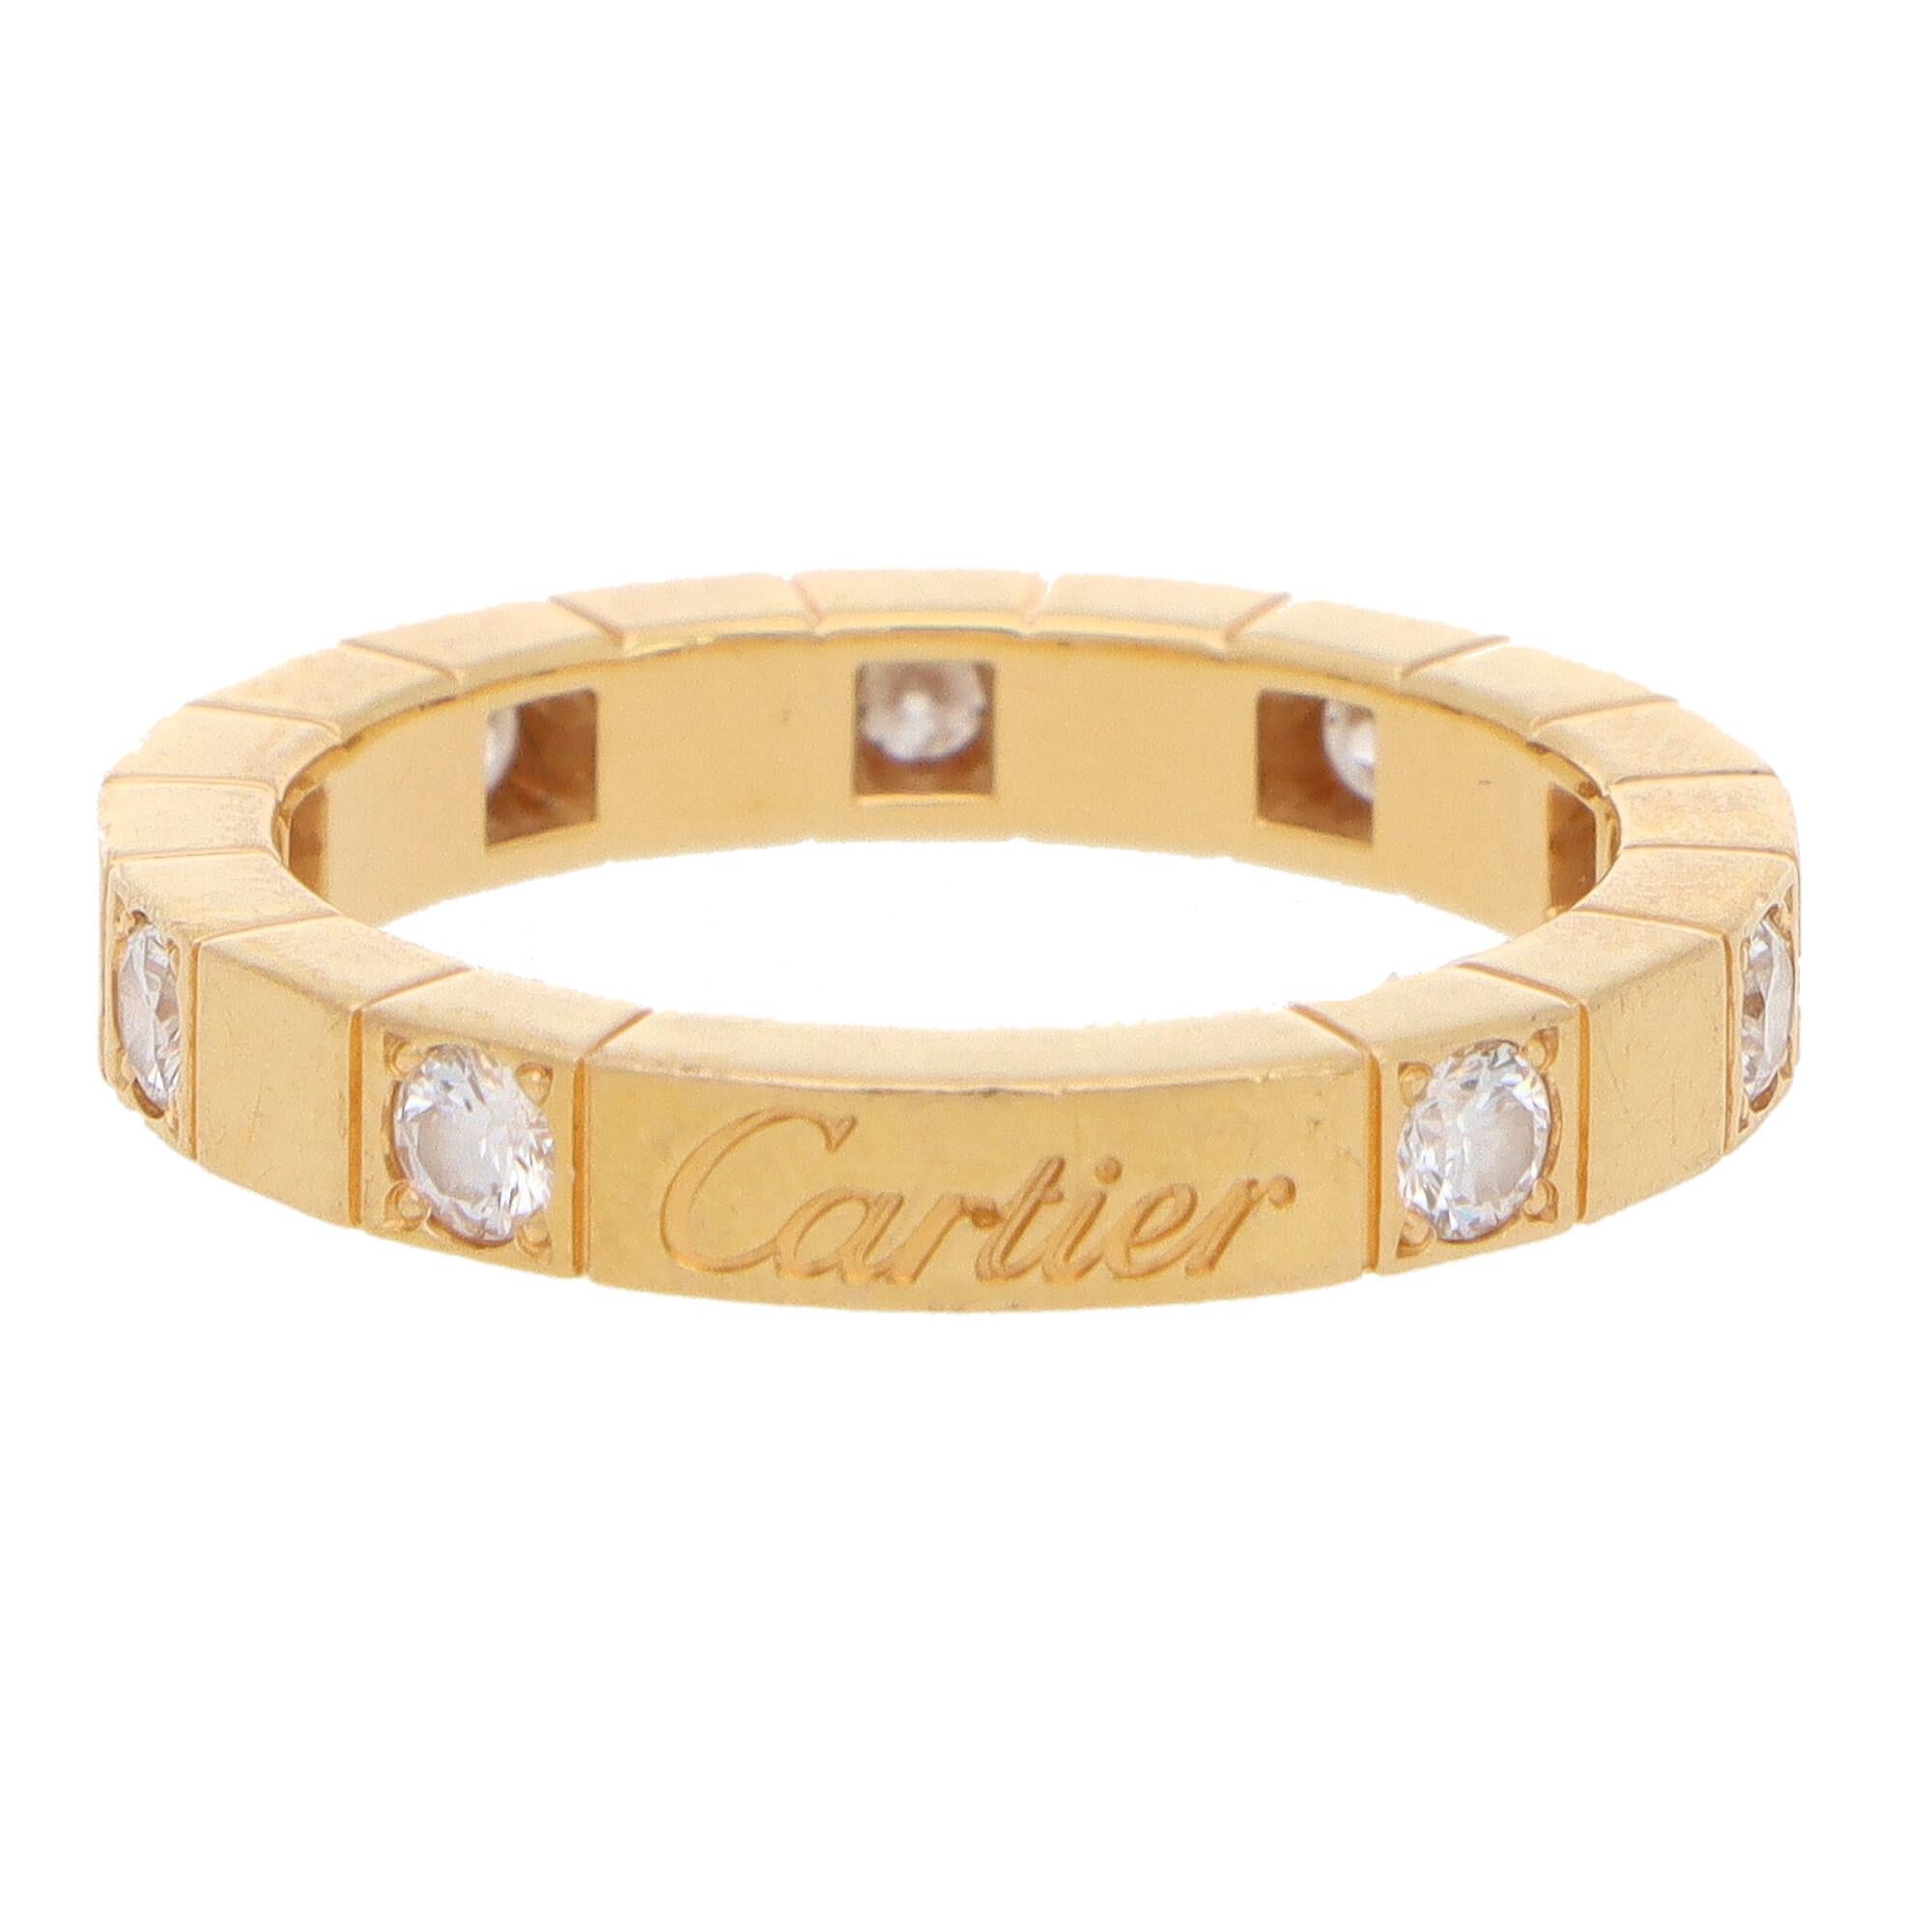 Modern Vintage Cartier Lanières Diamond Eternity Band Ring Set in 18k Rose Gold